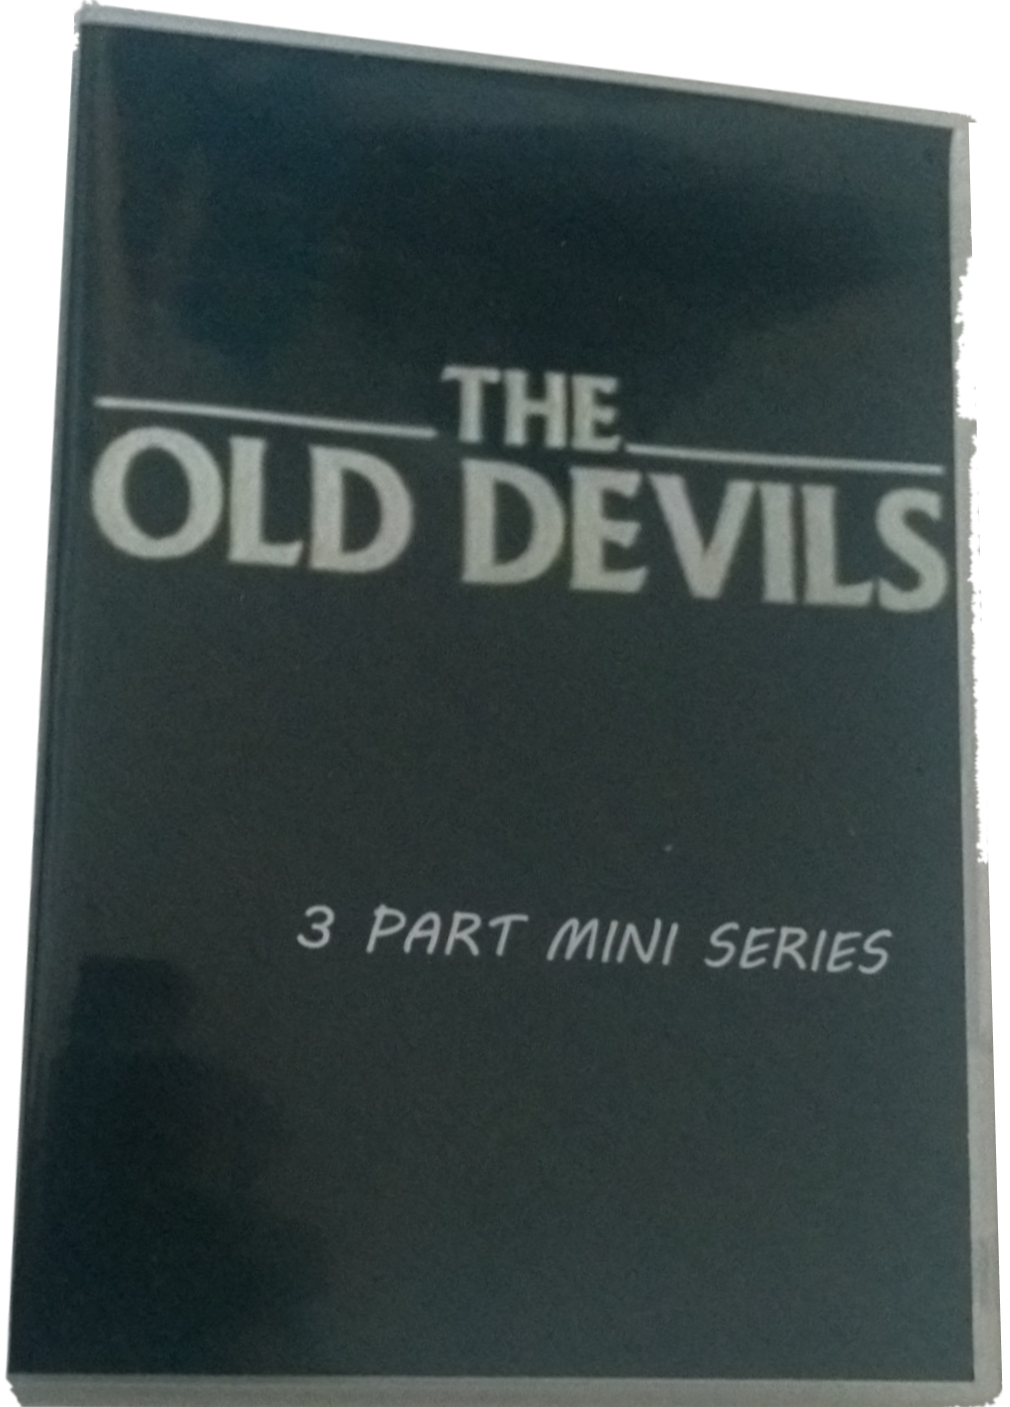 The Old Devils (1992) TV Mini Series on DVD